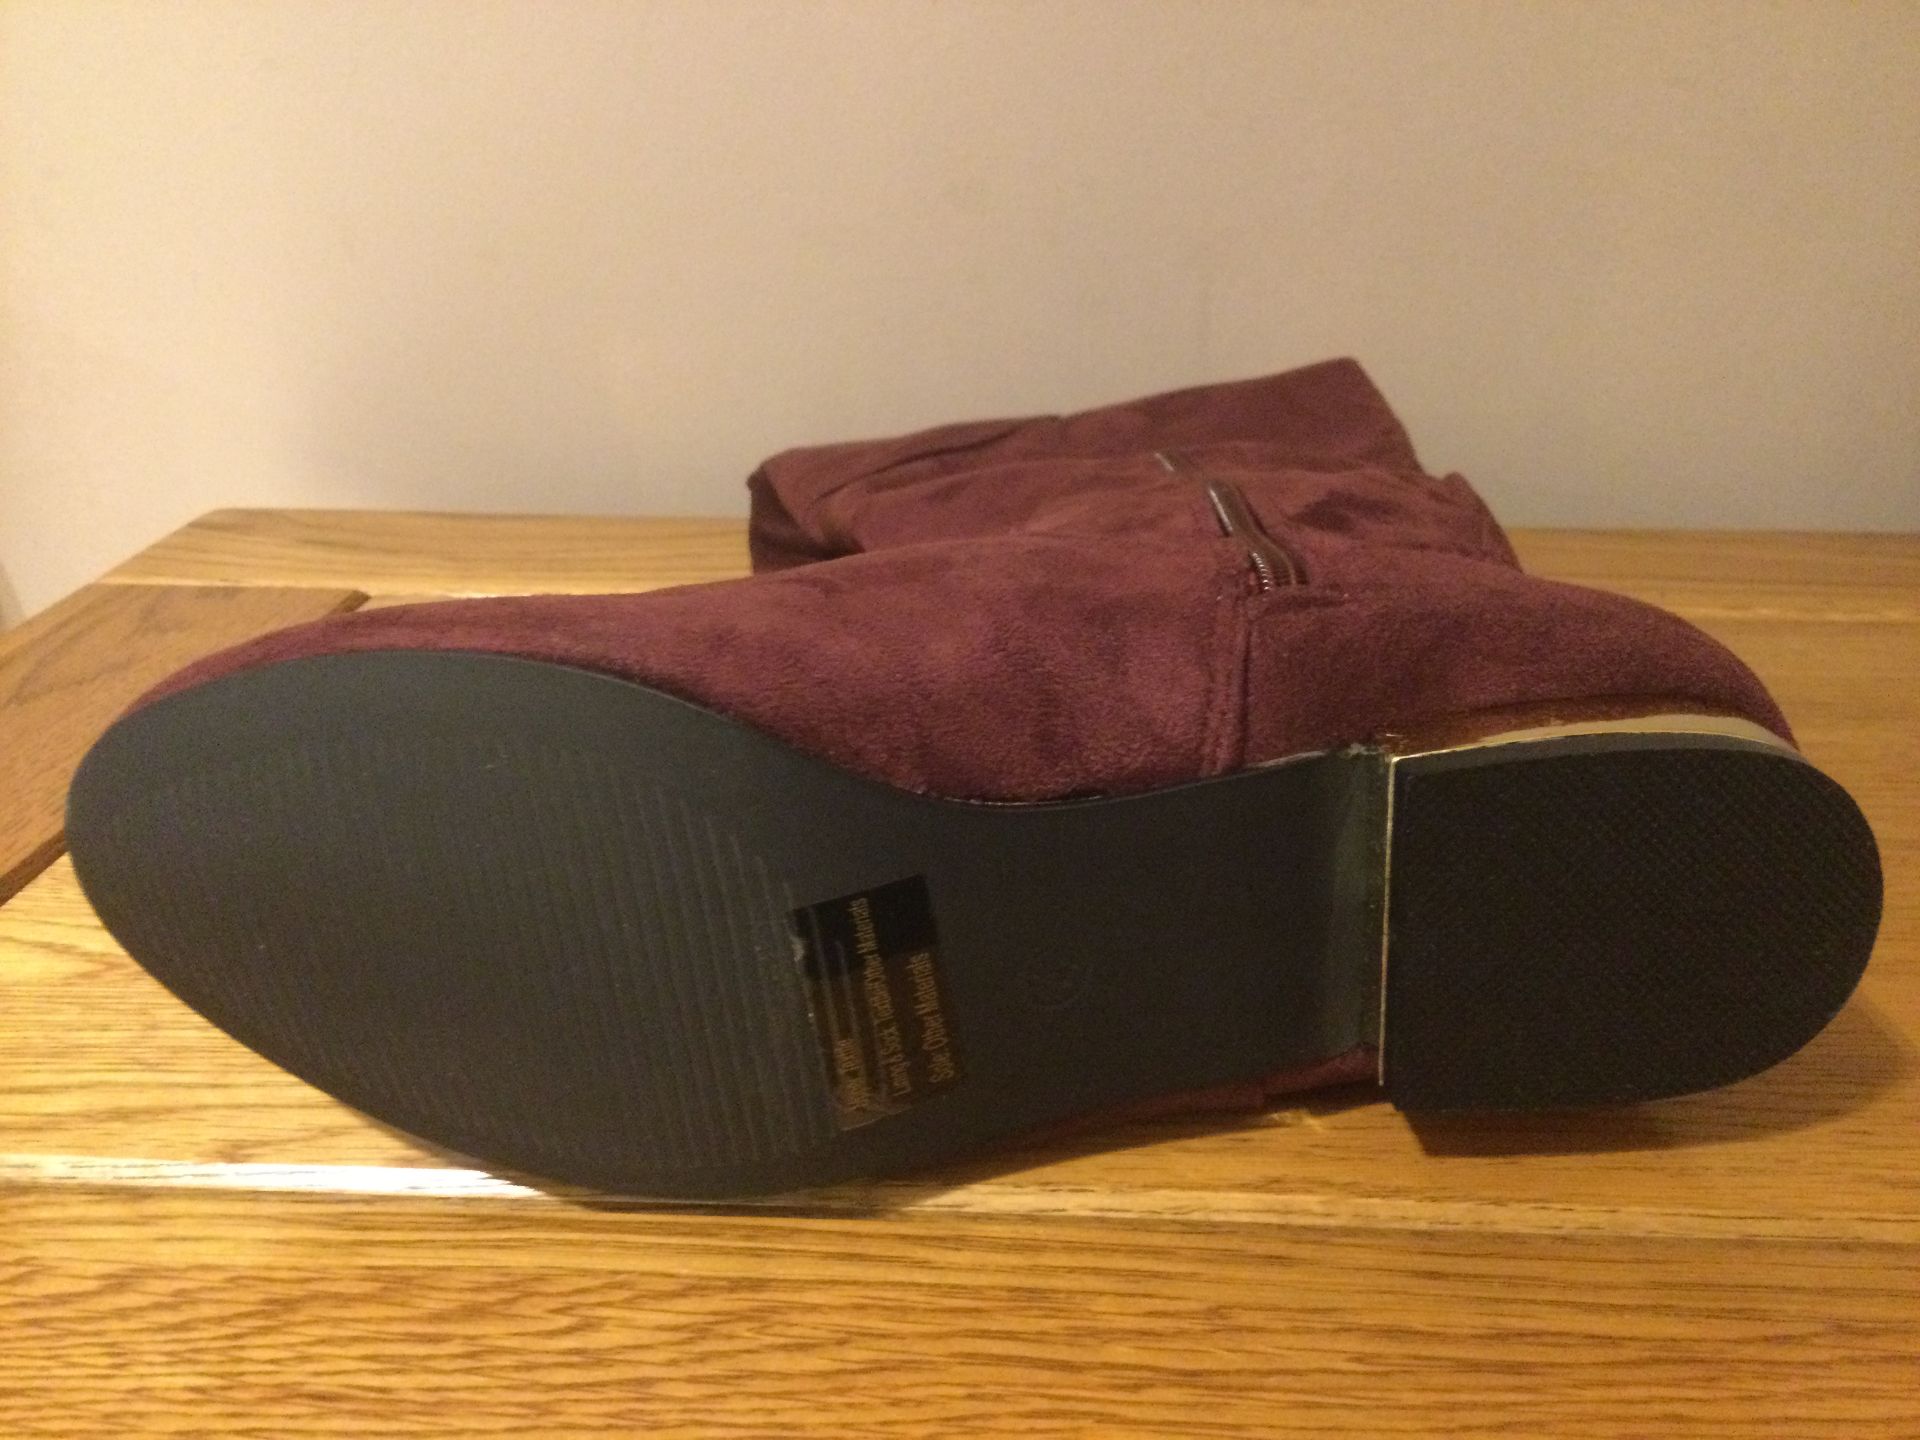 Dolcis “Katie” Long Boots, Low Heel, Size 5, Burgundy - New RRP £55.00 - Bild 5 aus 7